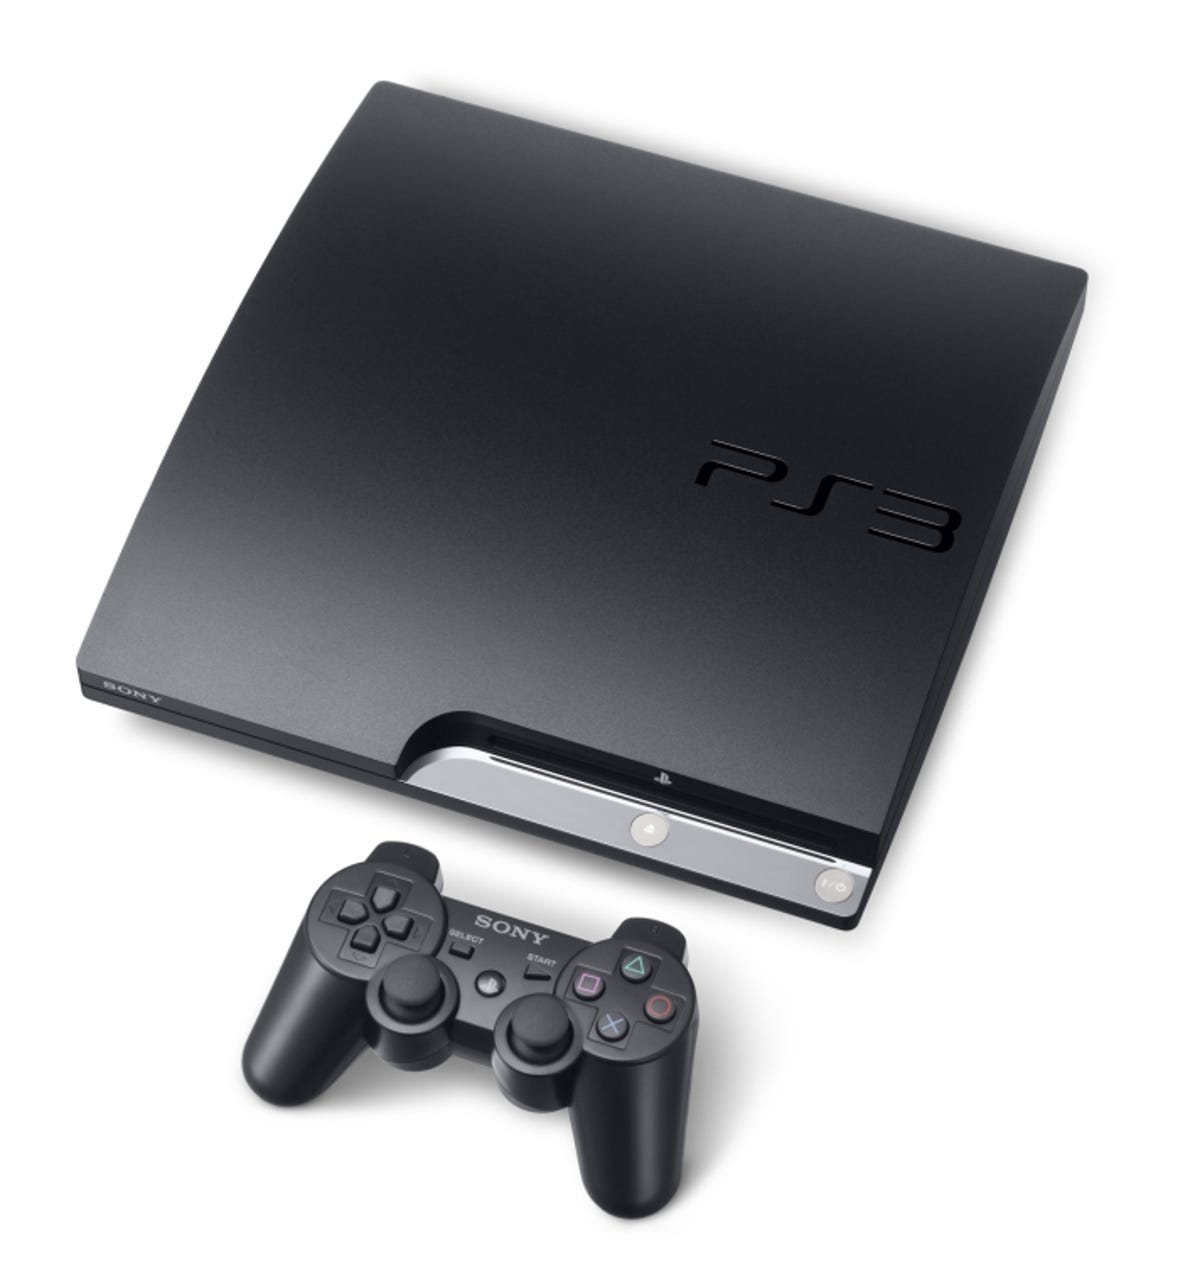 PlayStation 3 Slim -- photos - CNET